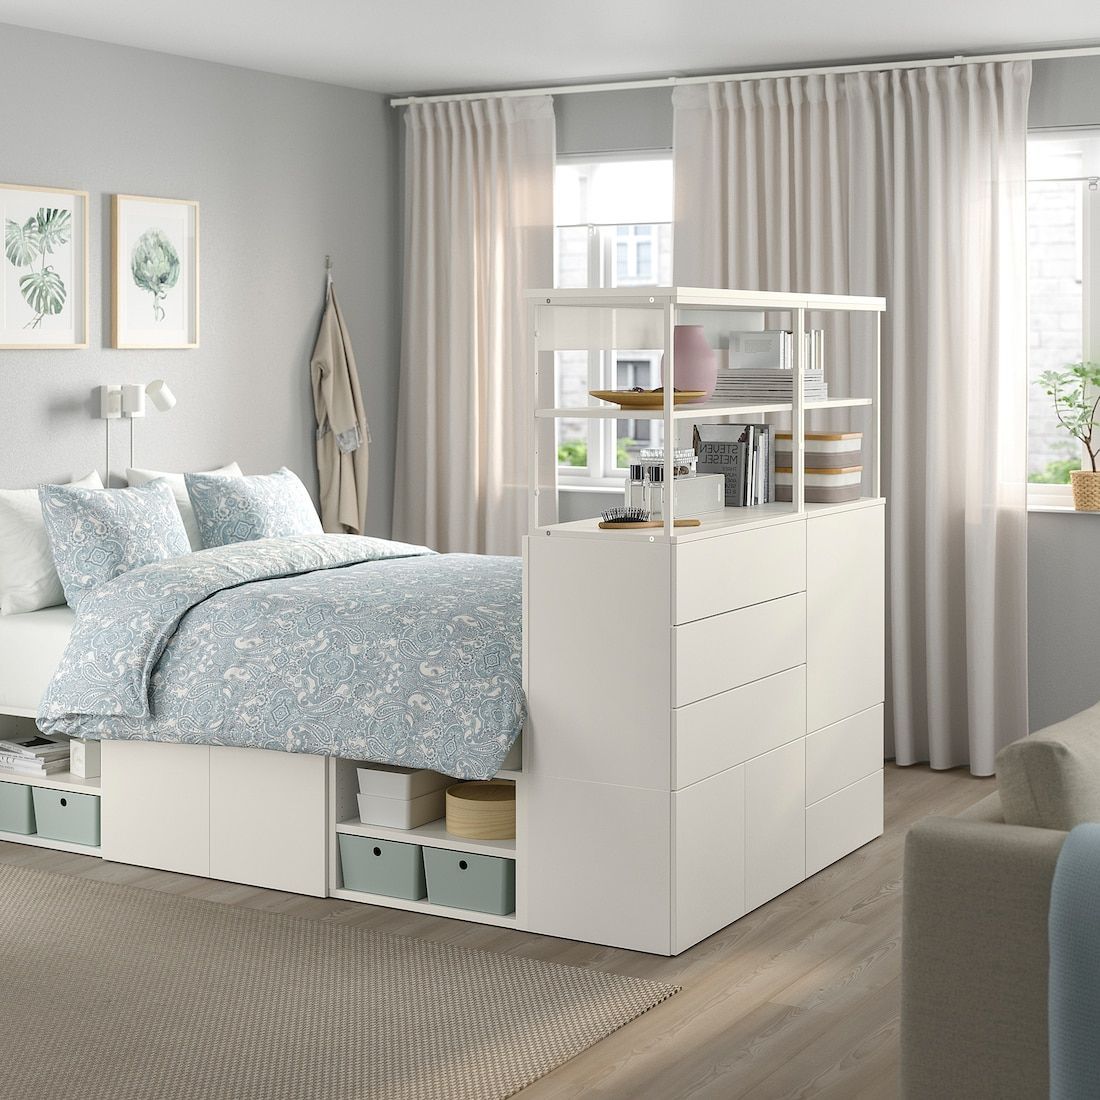 17 Bedroom Storage Ideas Solutions To, Bedroom Shelving Ideas Ikea